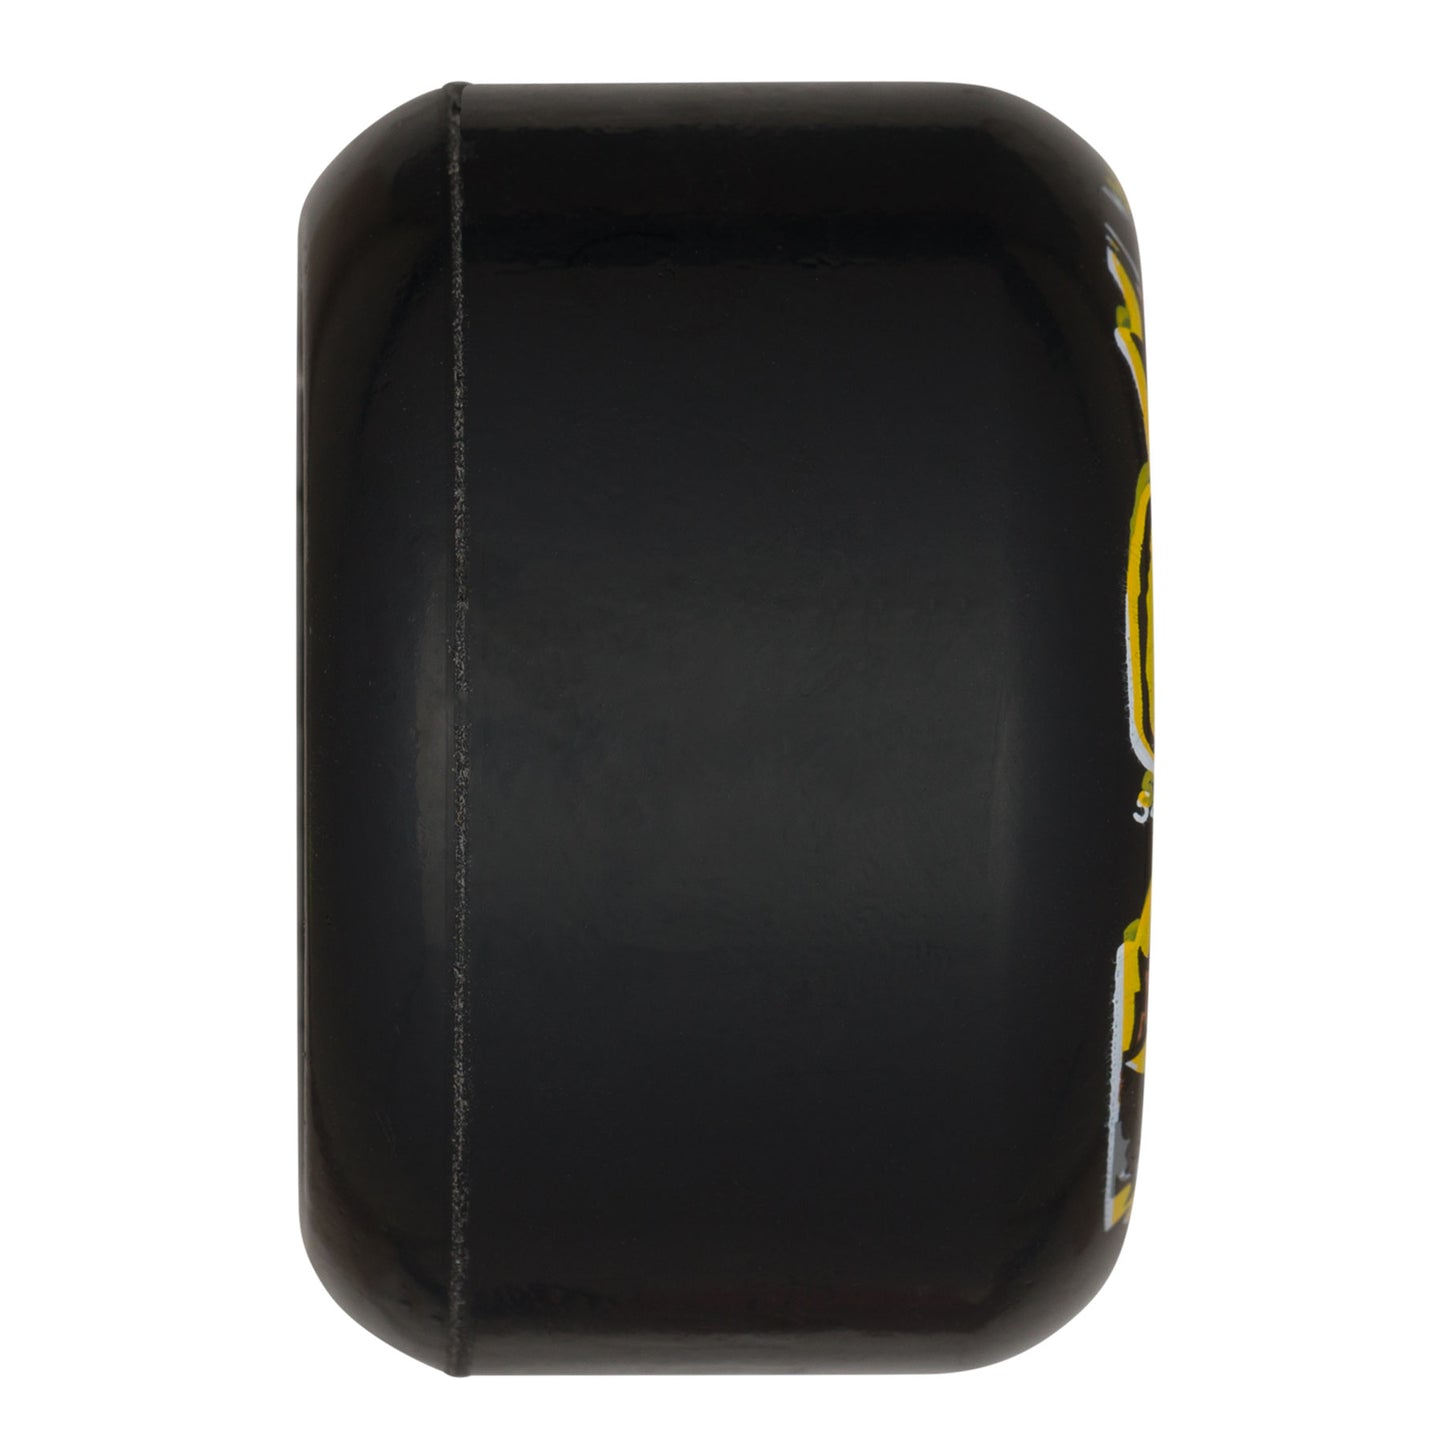 OJ Wheels - 54mm Black Cats Keyframe Black 87a Skateboard Wheels